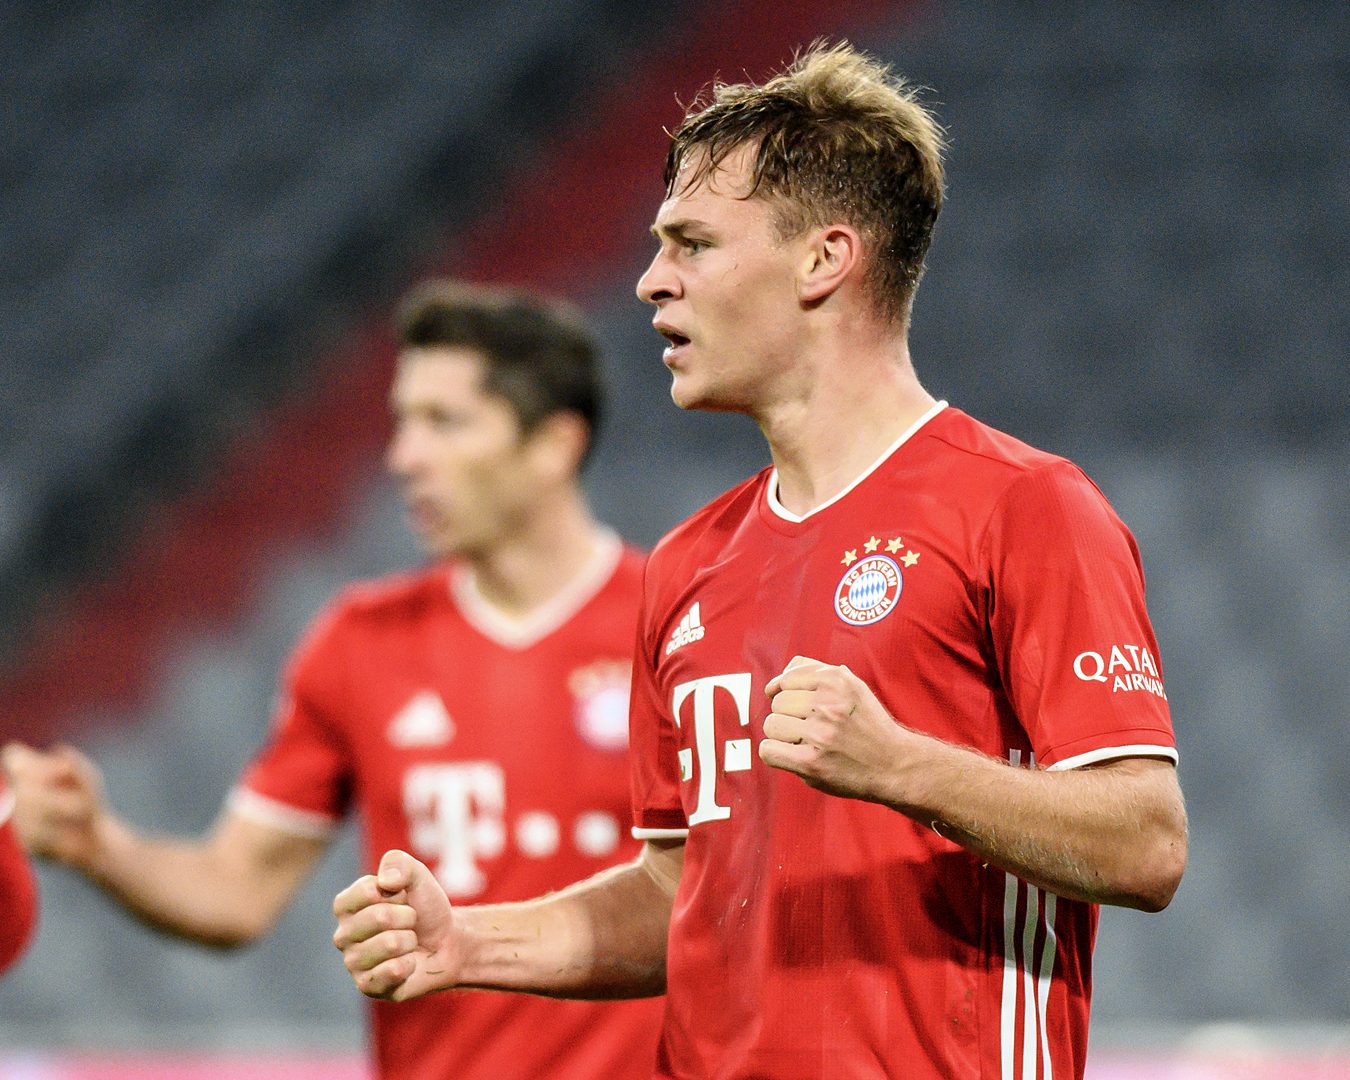 Joshua Kimmich is a player who will shape Bayern Munich as a club